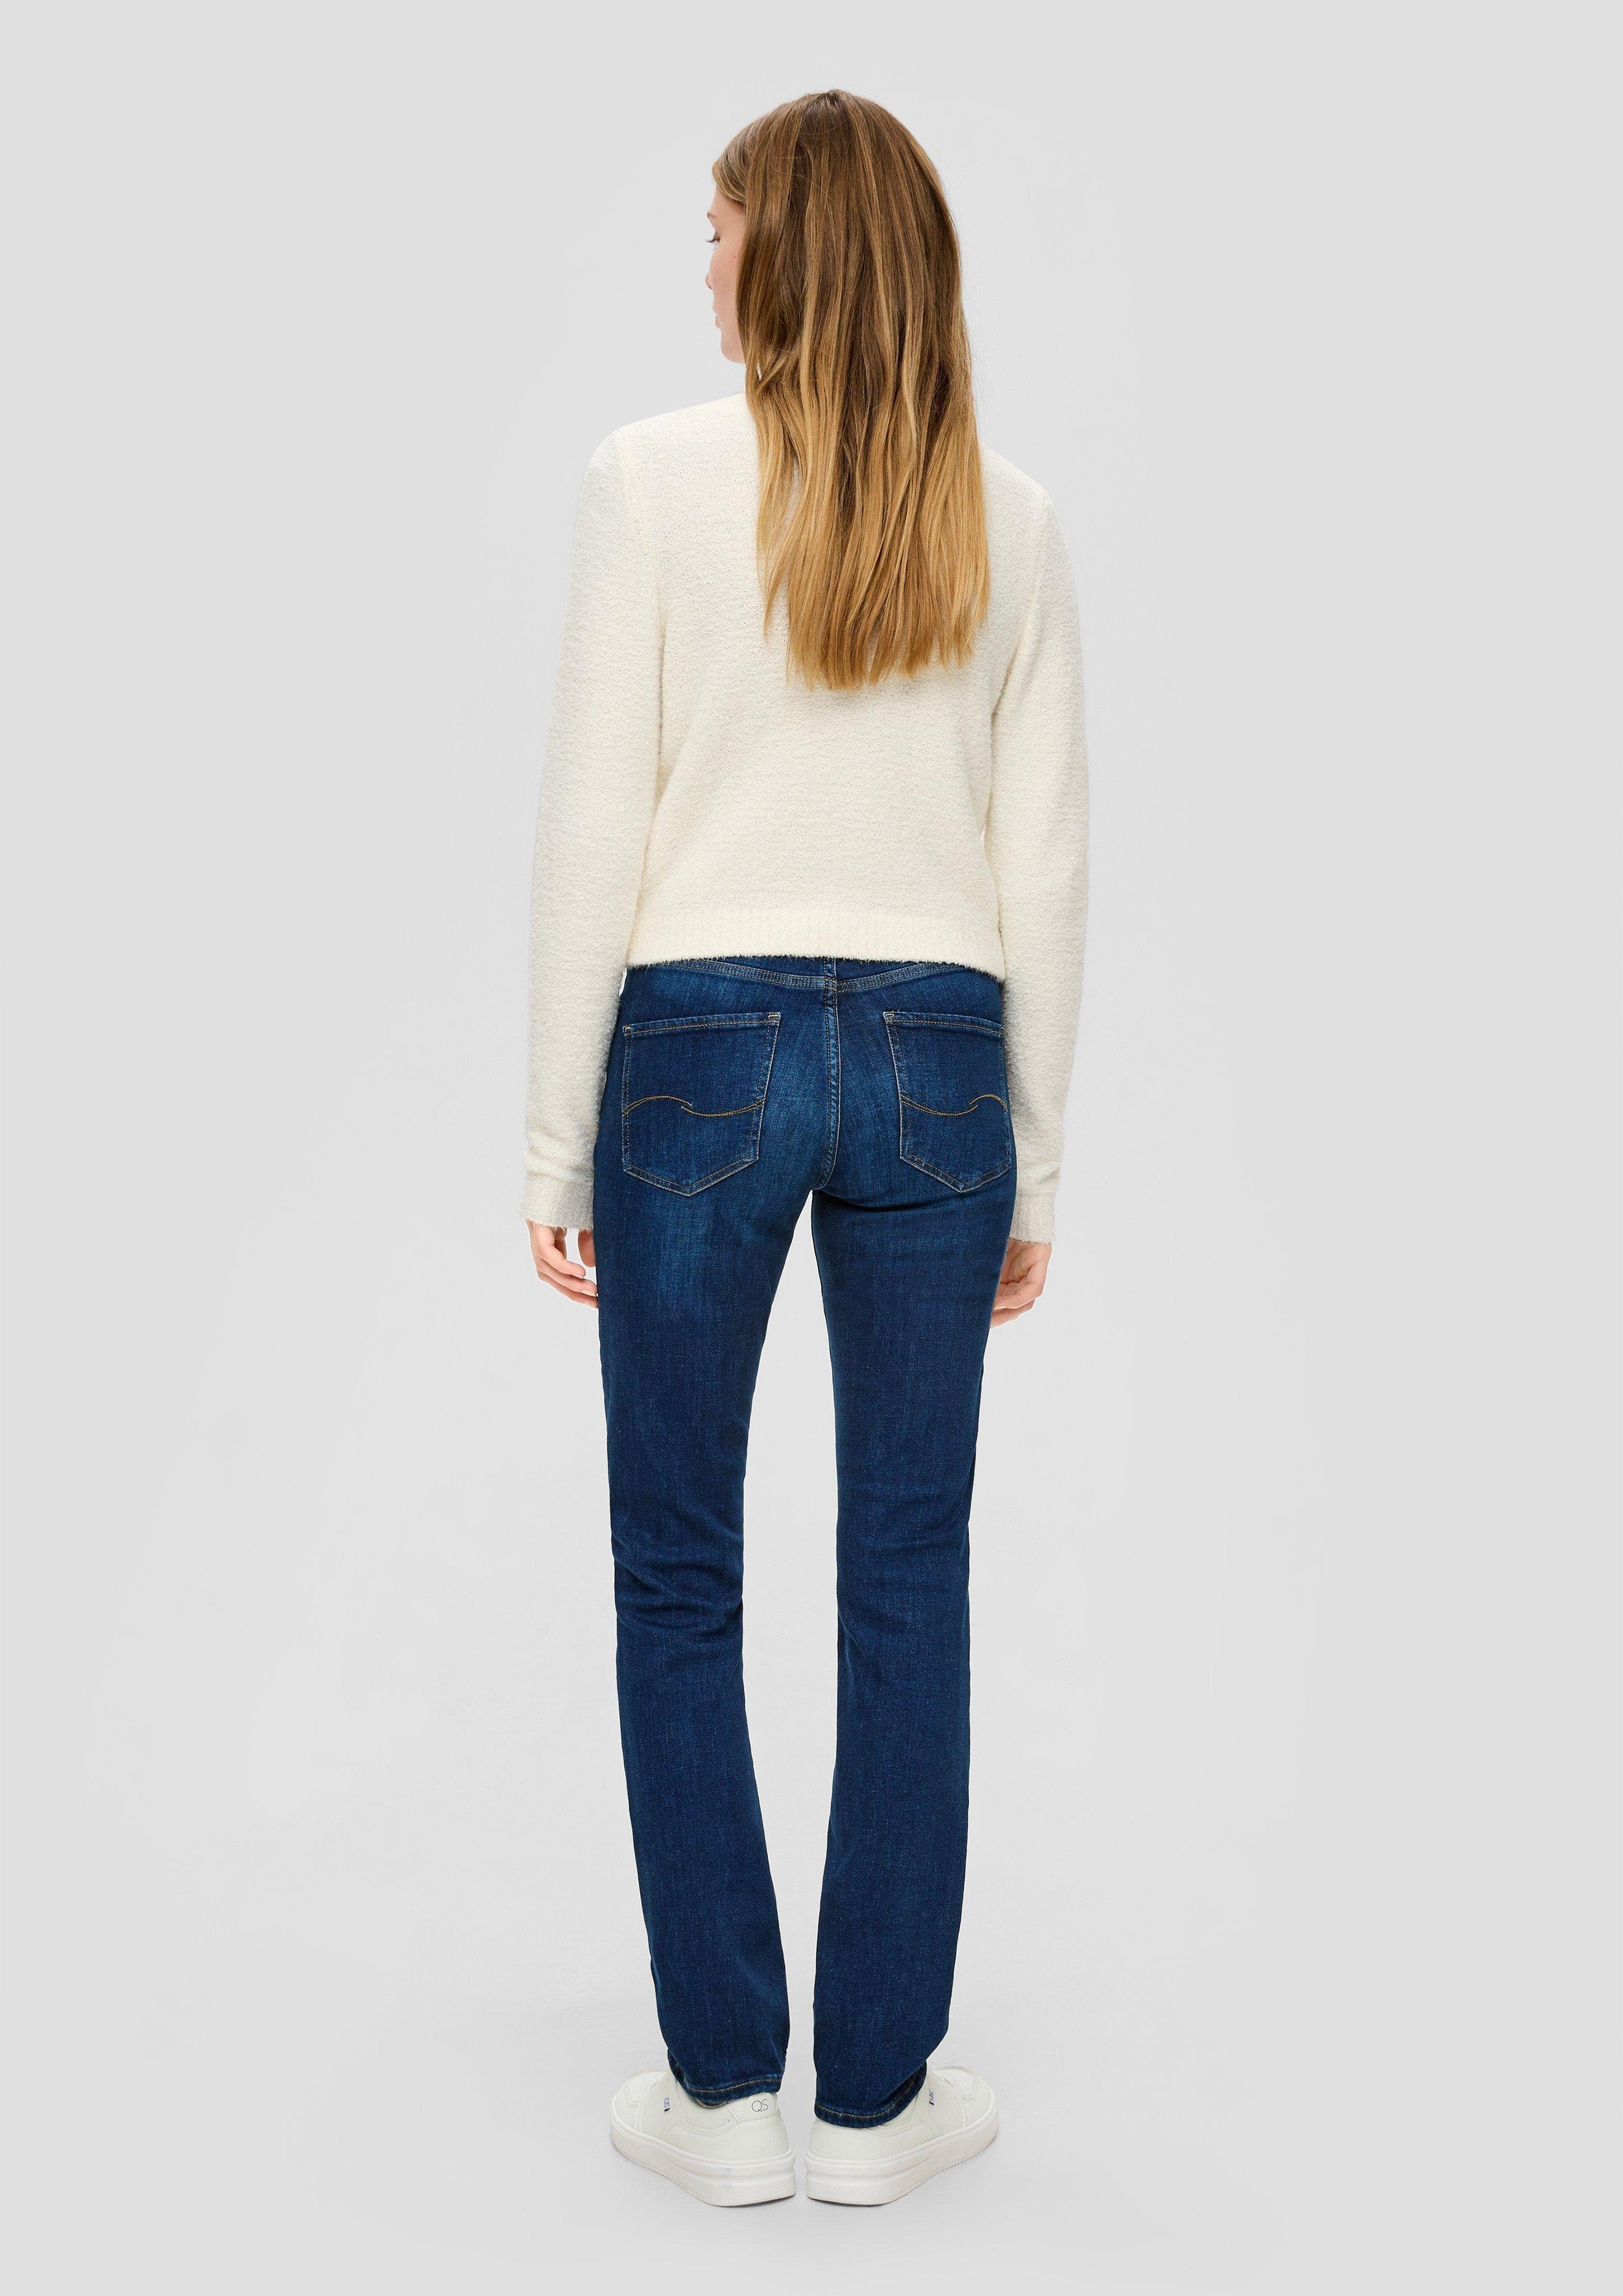 Stoffhose Catie: Waschung, Jeans dunkelblau Leg mit Kontrastnähte, Destroyes, Straight QS Label-Patch